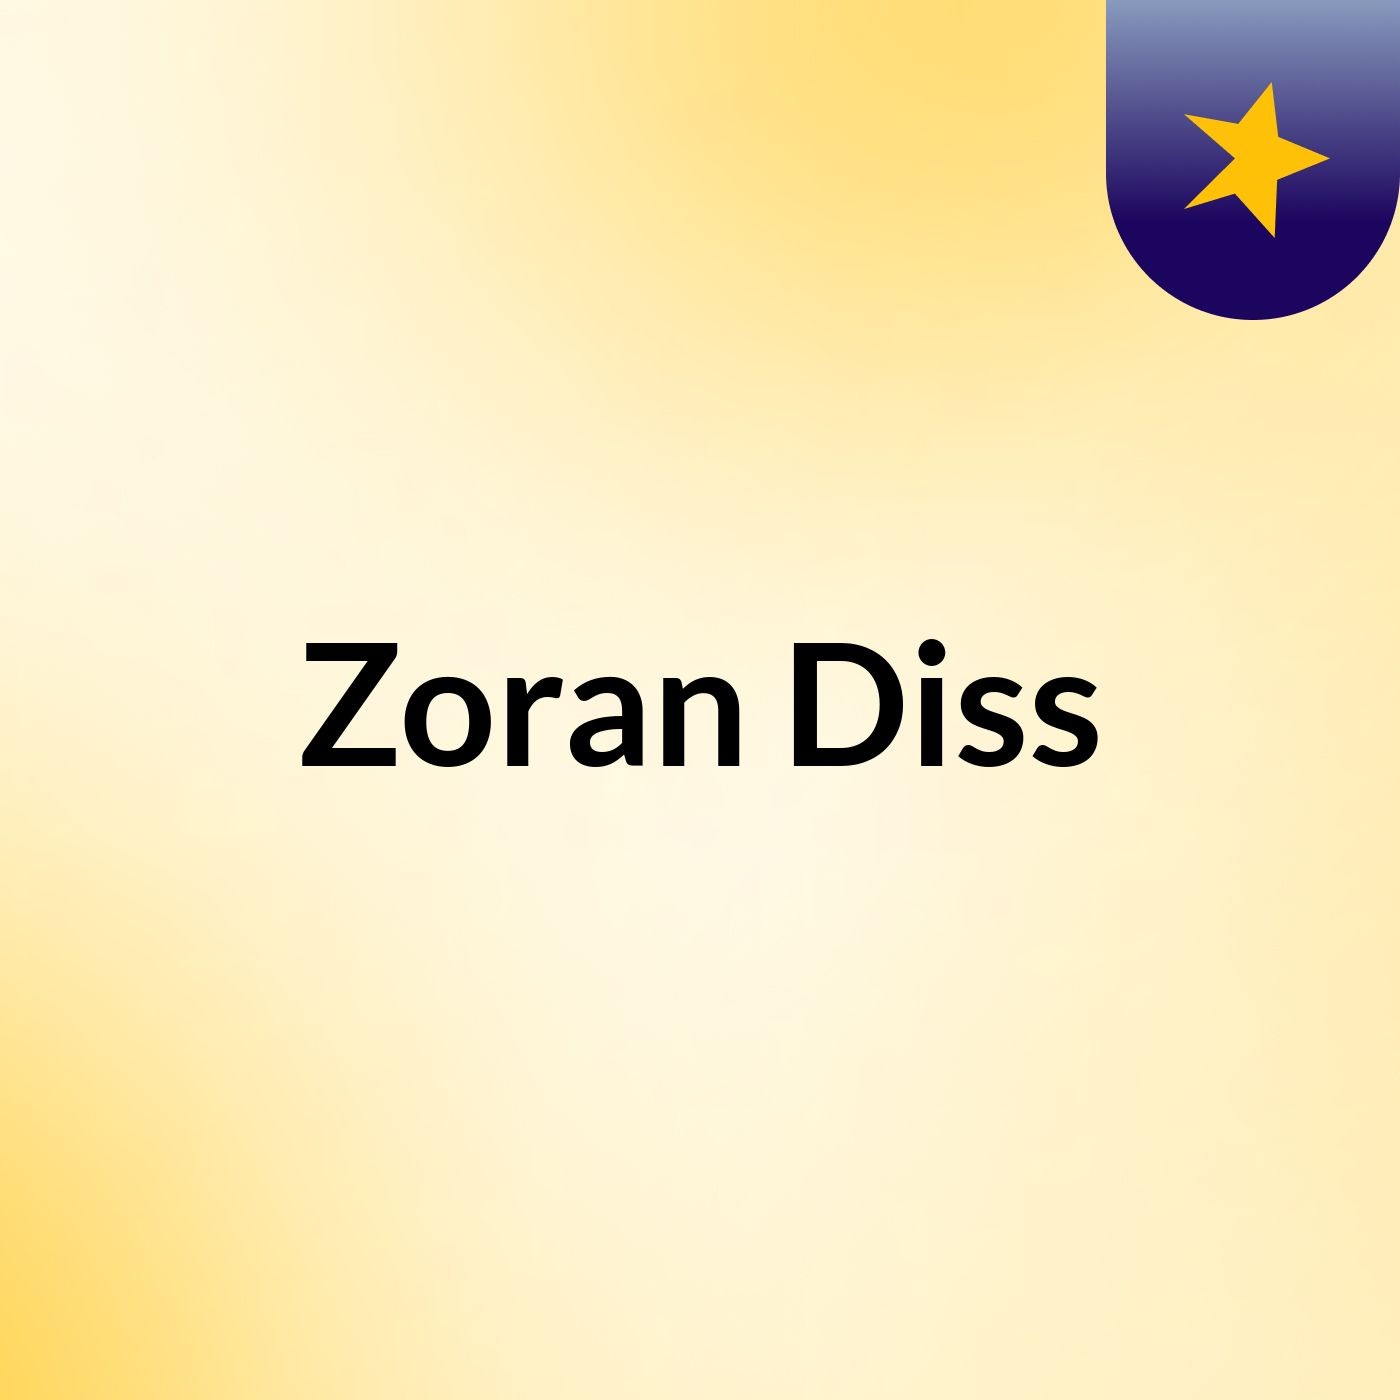 Zoran Diss